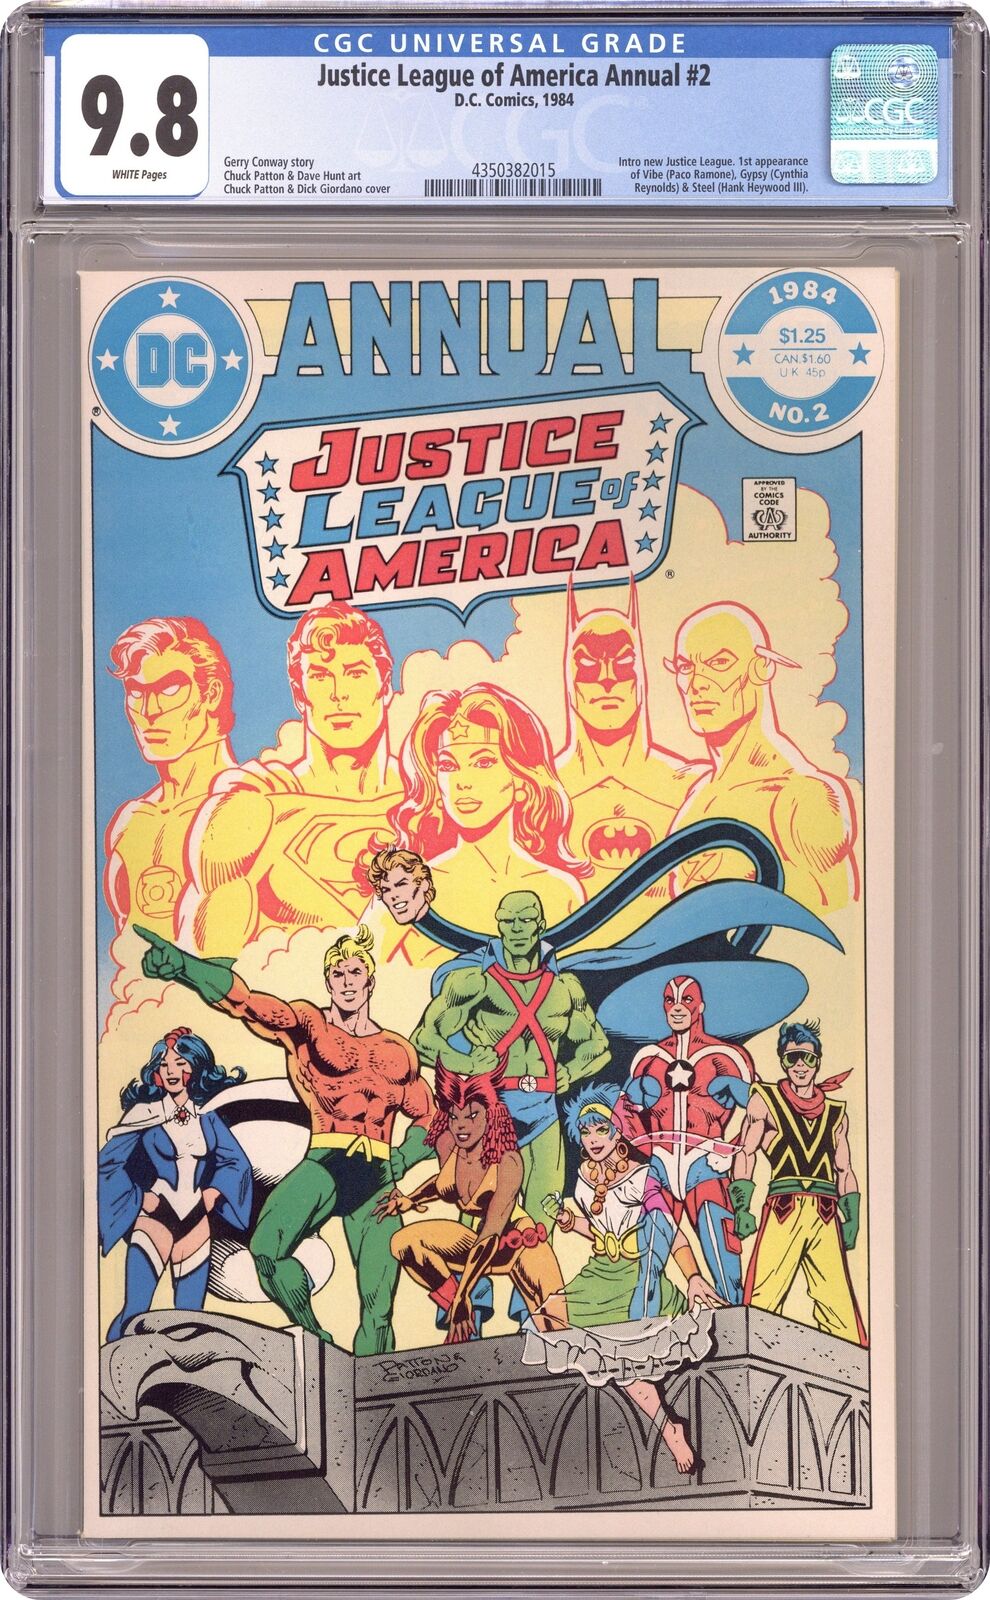 Justice League of America Annual #2 CGC 9.8 1984 4350382015